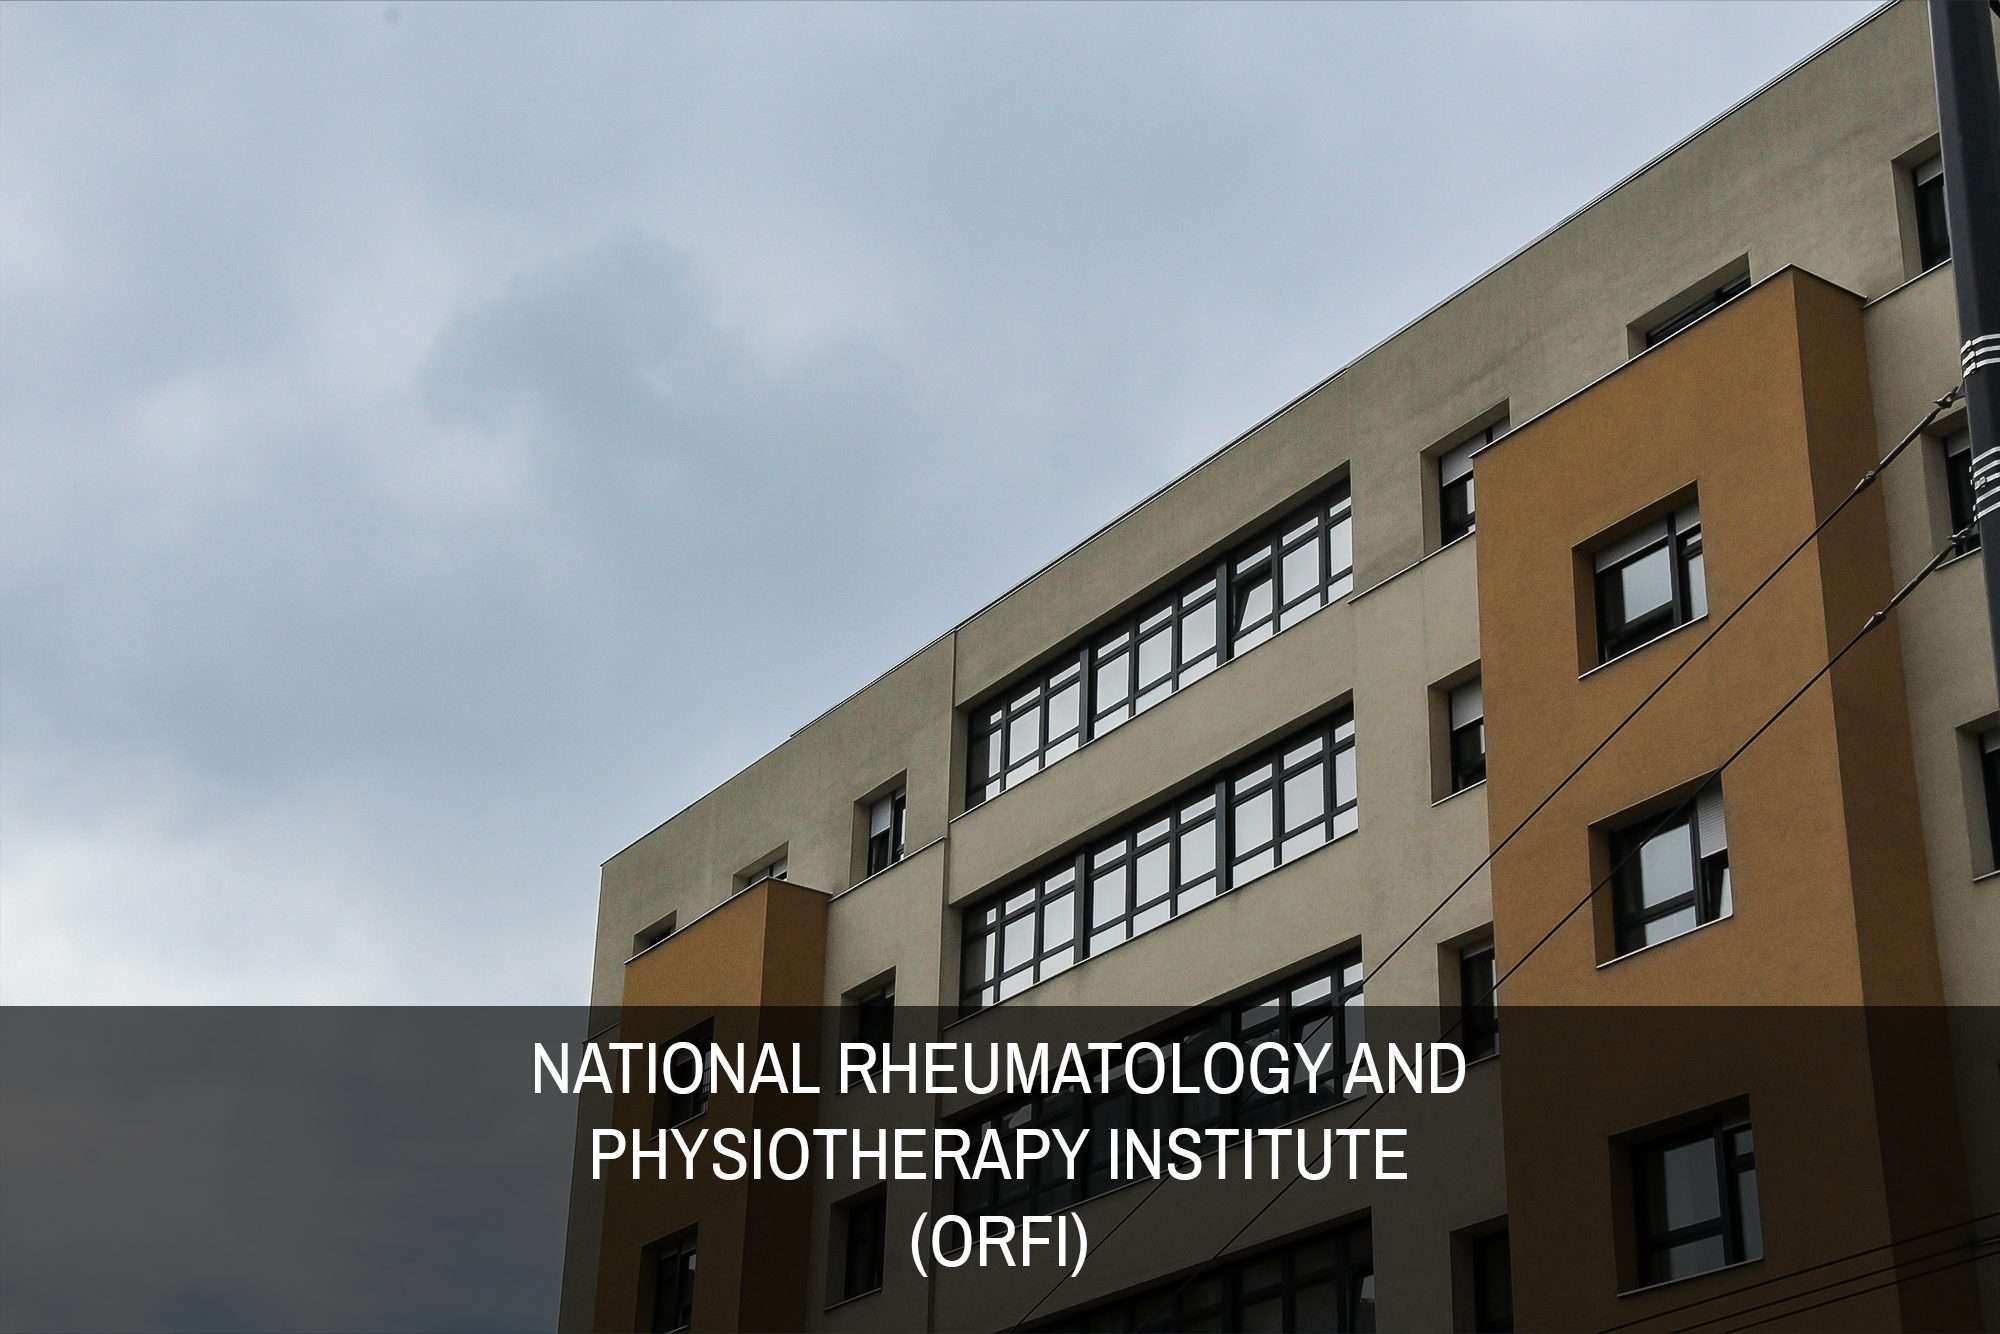 Nationa-rheumotology-and-Physiotherapy-institueOrfi.02.jpg